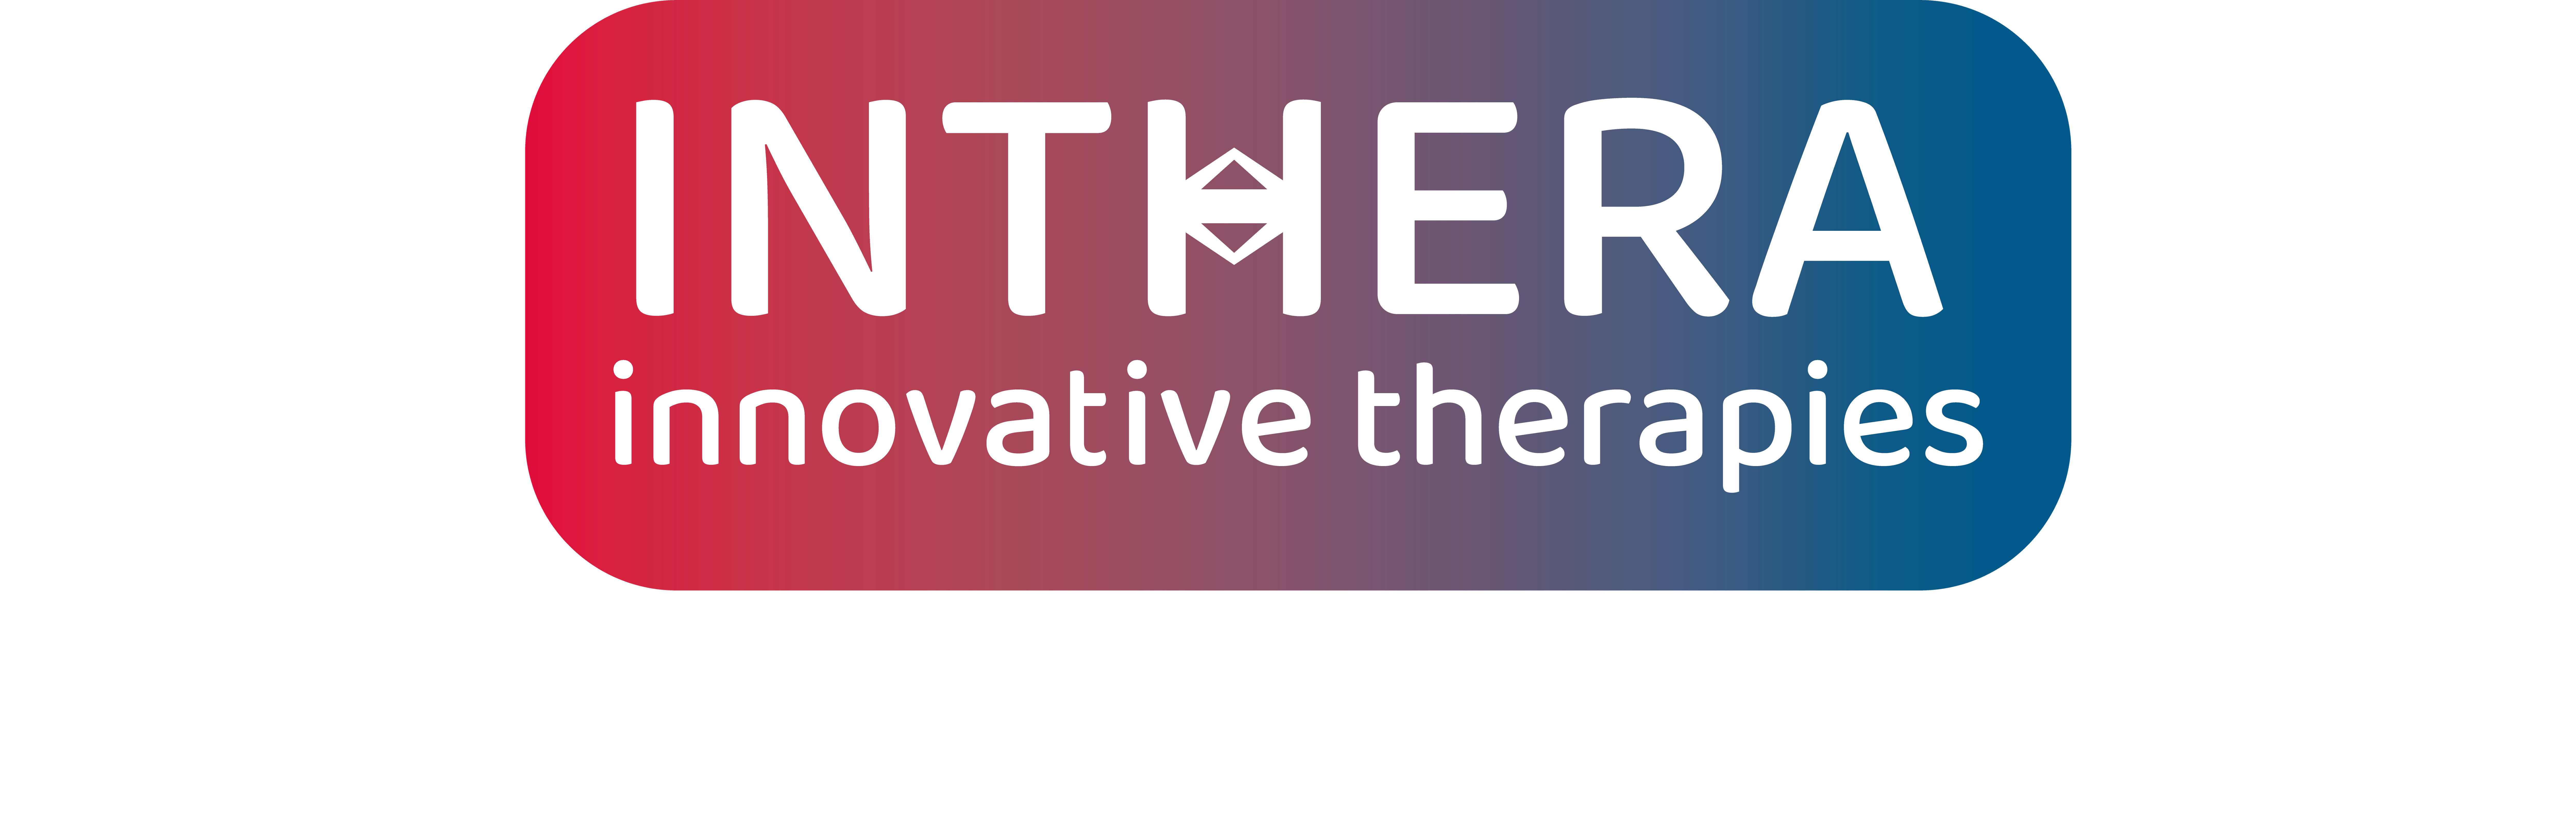 Inthera - Innovative Therapies